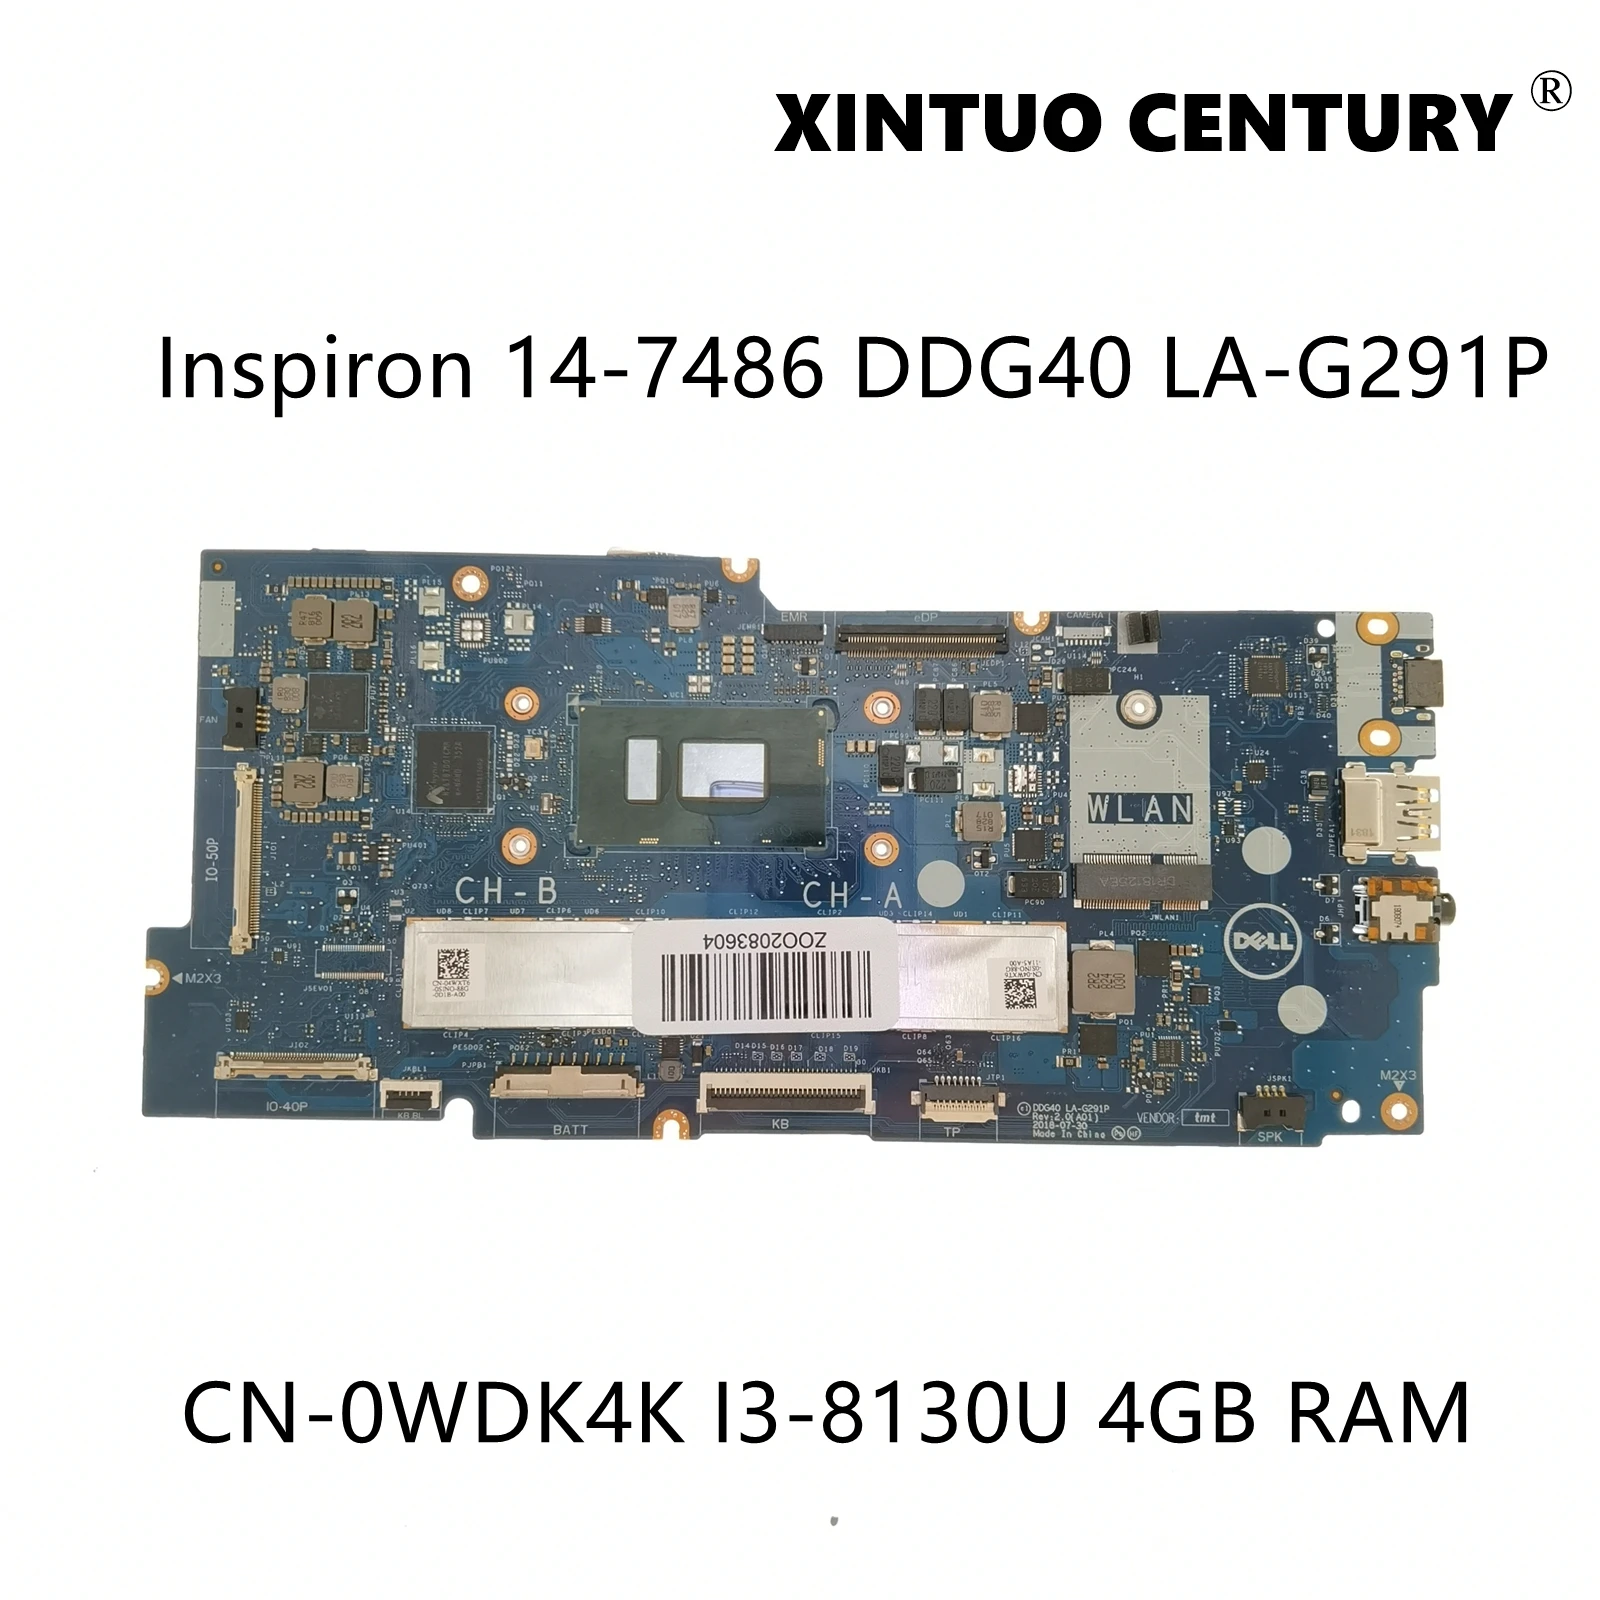 

CN-0WDK4K 0WDK4K WDK4K For Dell Inspiron 14-7486 Laptop Motherboard DDG40 LA-G291P W/ I3-8130U 4GB RAM 100% Tested Working